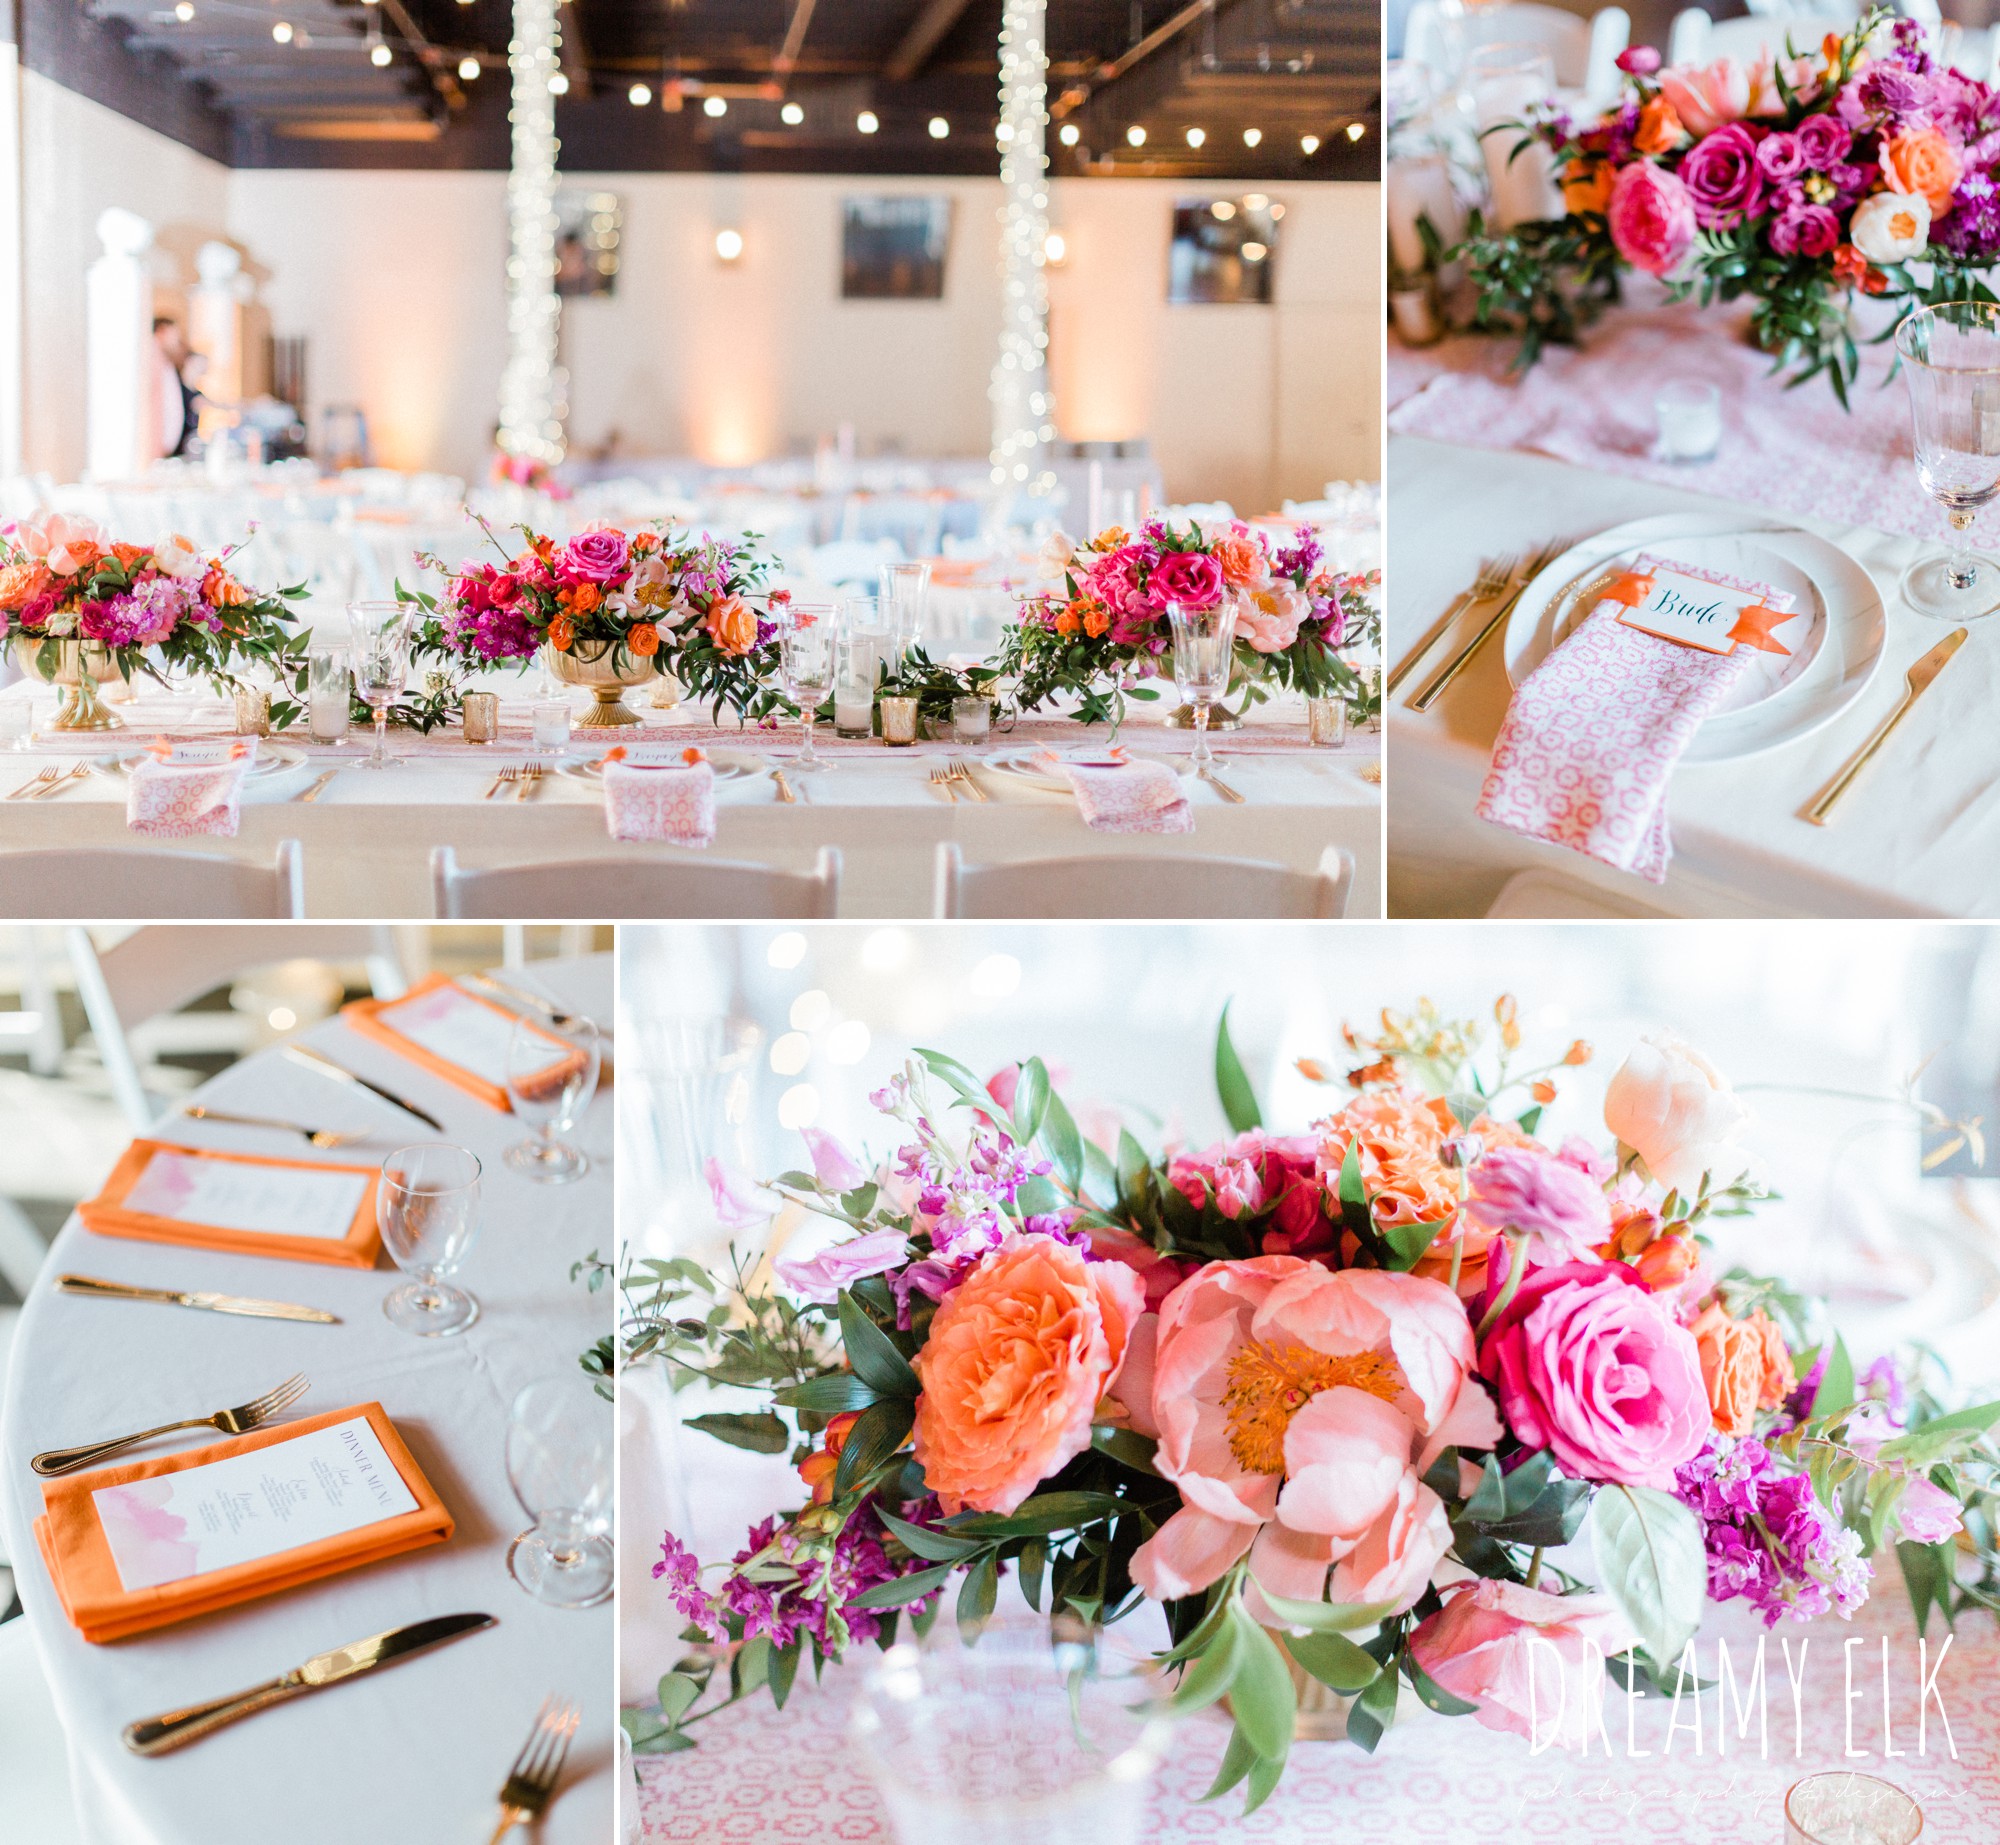 reception decor, spring colorful pink orange wedding photo, fort worth, texas, dreamy elk photography and design, jen rios weddings, kate foley designs